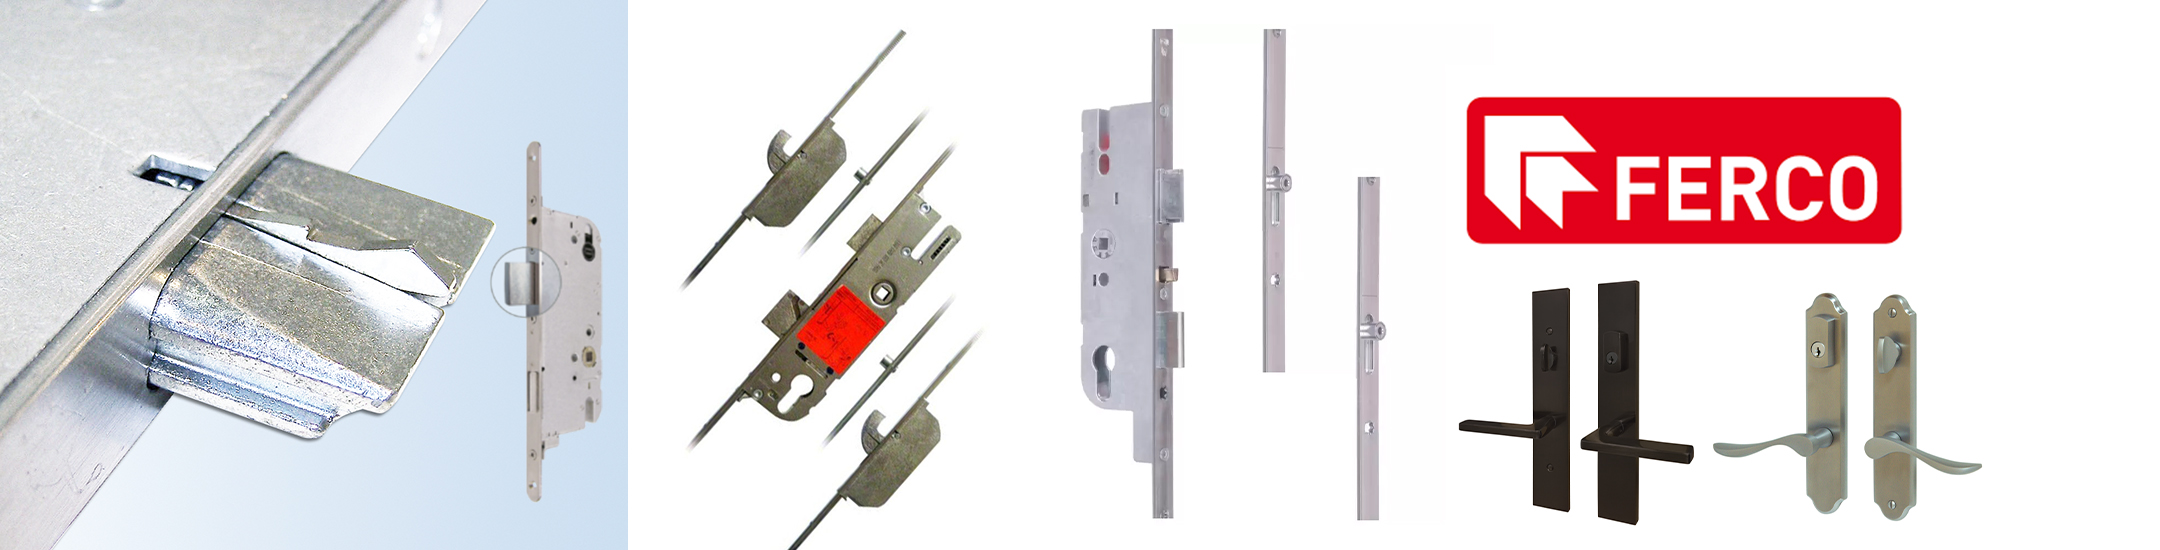 Ferco Architectural Hardware | Multipoint Locks